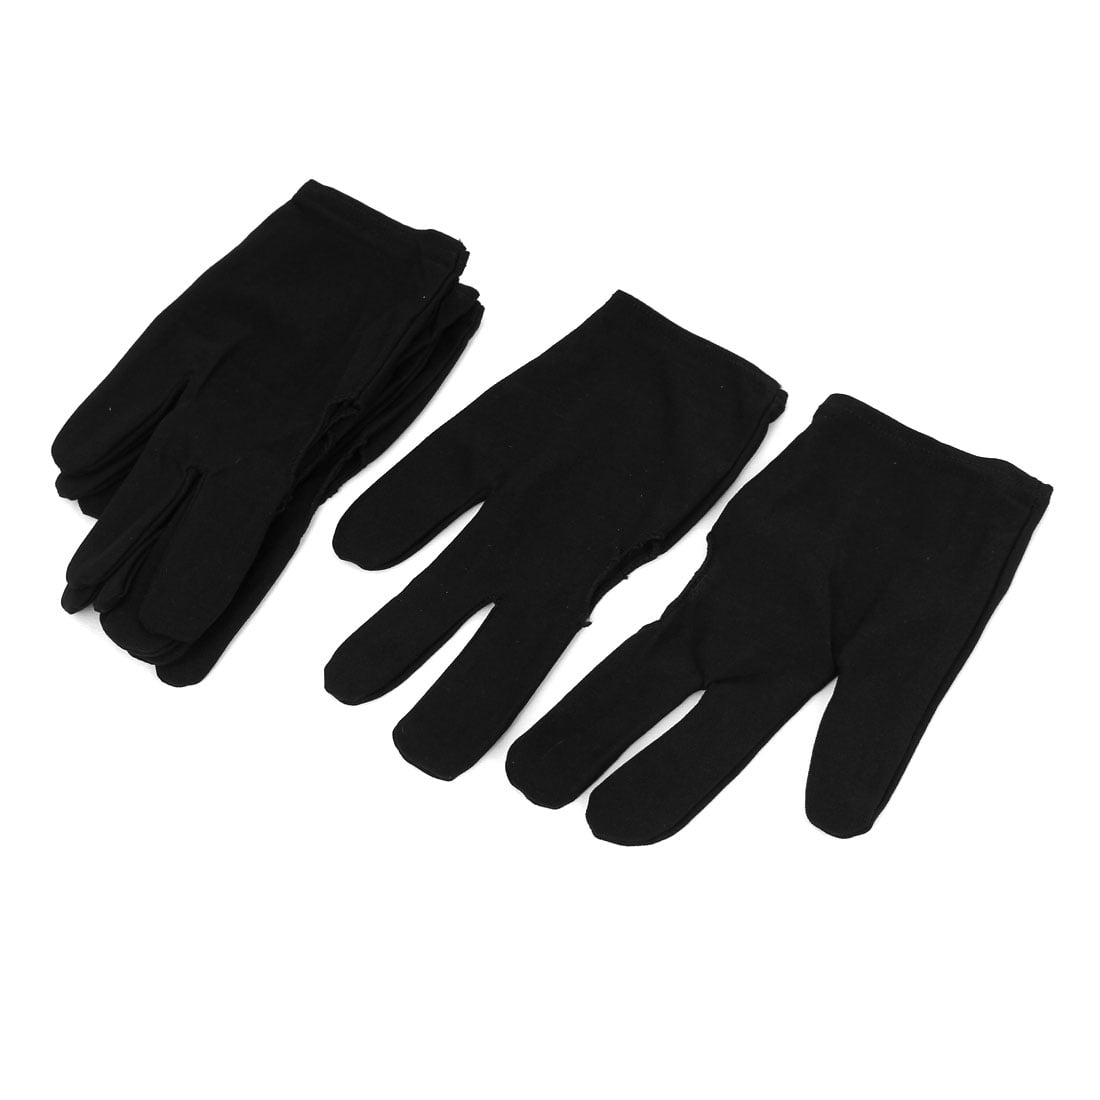 Sport Billiard 3 Fingers Elastic Gloves Black Pair for Pool Cue 